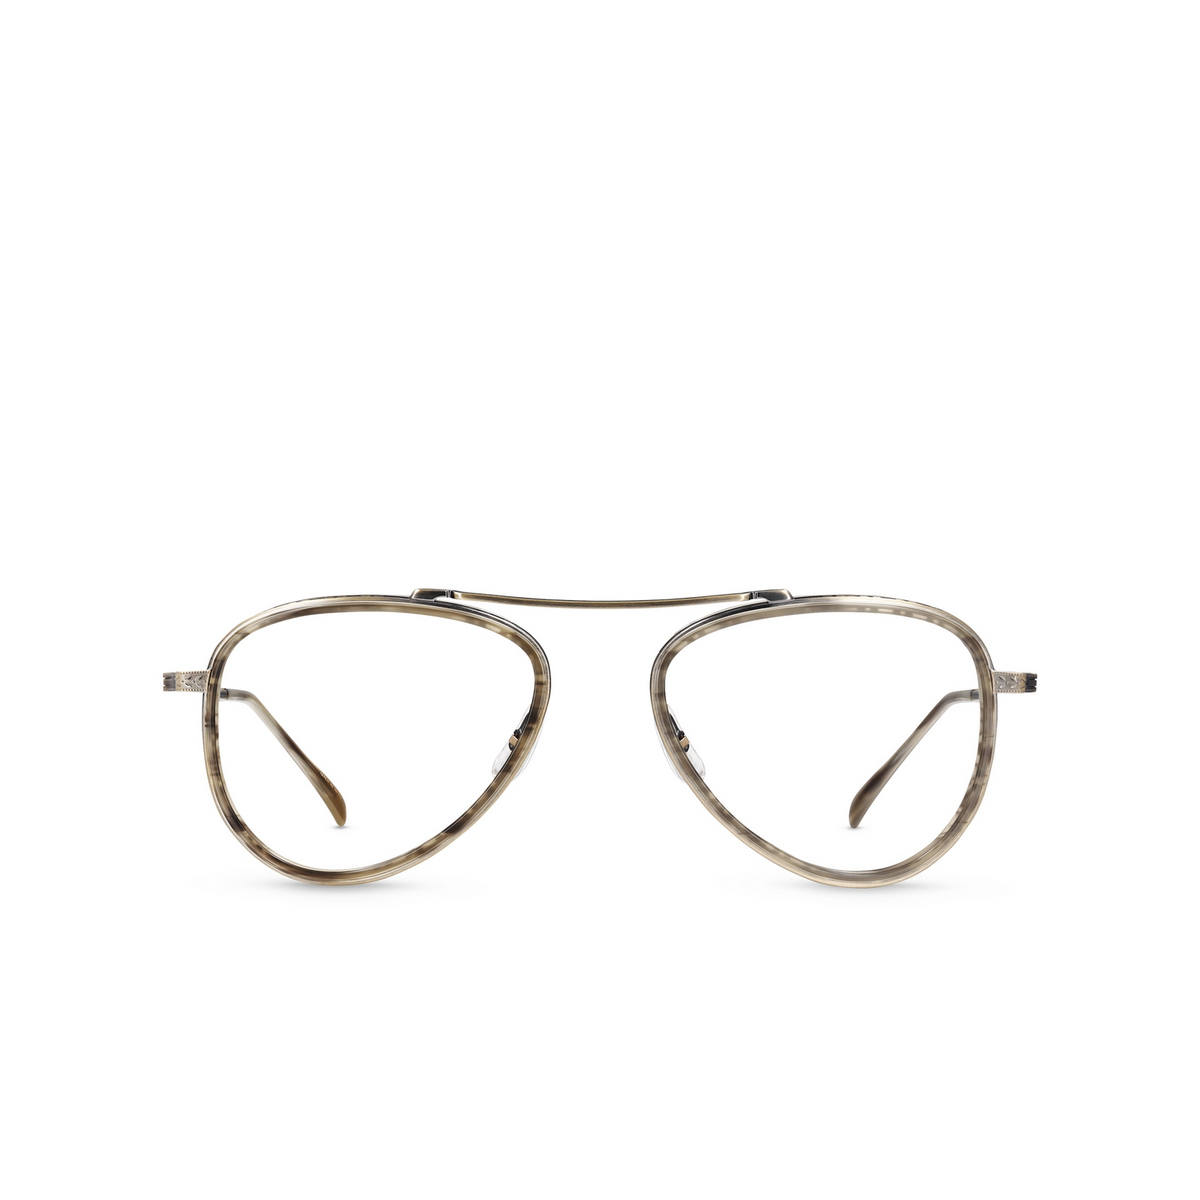 Mr. Leight ICHI C Eyeglasses GW-ATSG-GW Greywood-Antique Silver Gold - front view